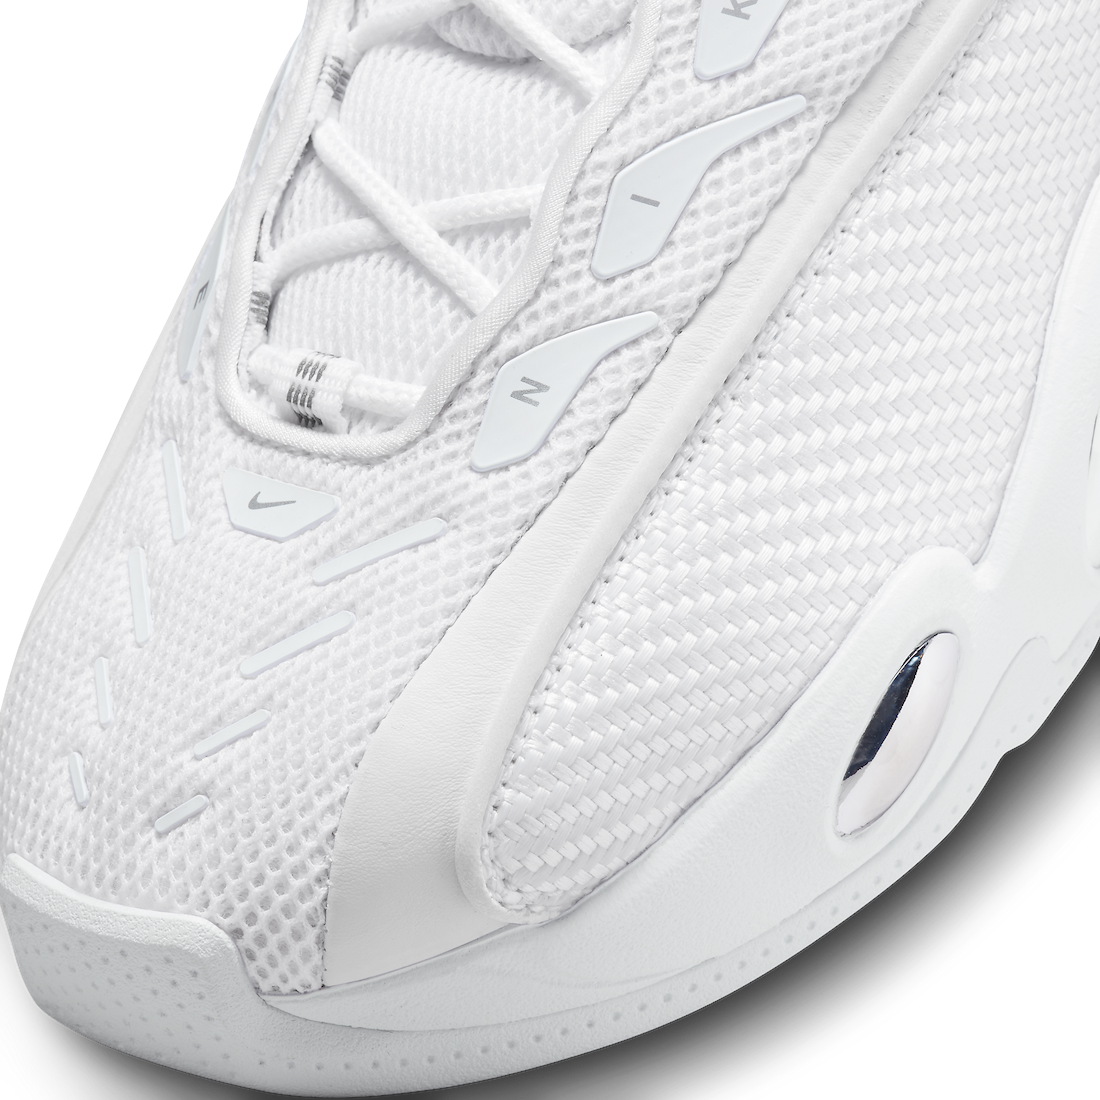 Nike-NOCTA-Glide-White-Chrome-DM0879-100-6.png